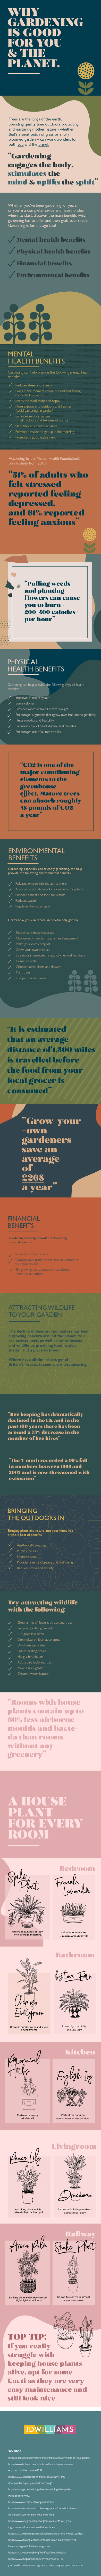 Benefits of Gardening Infographic